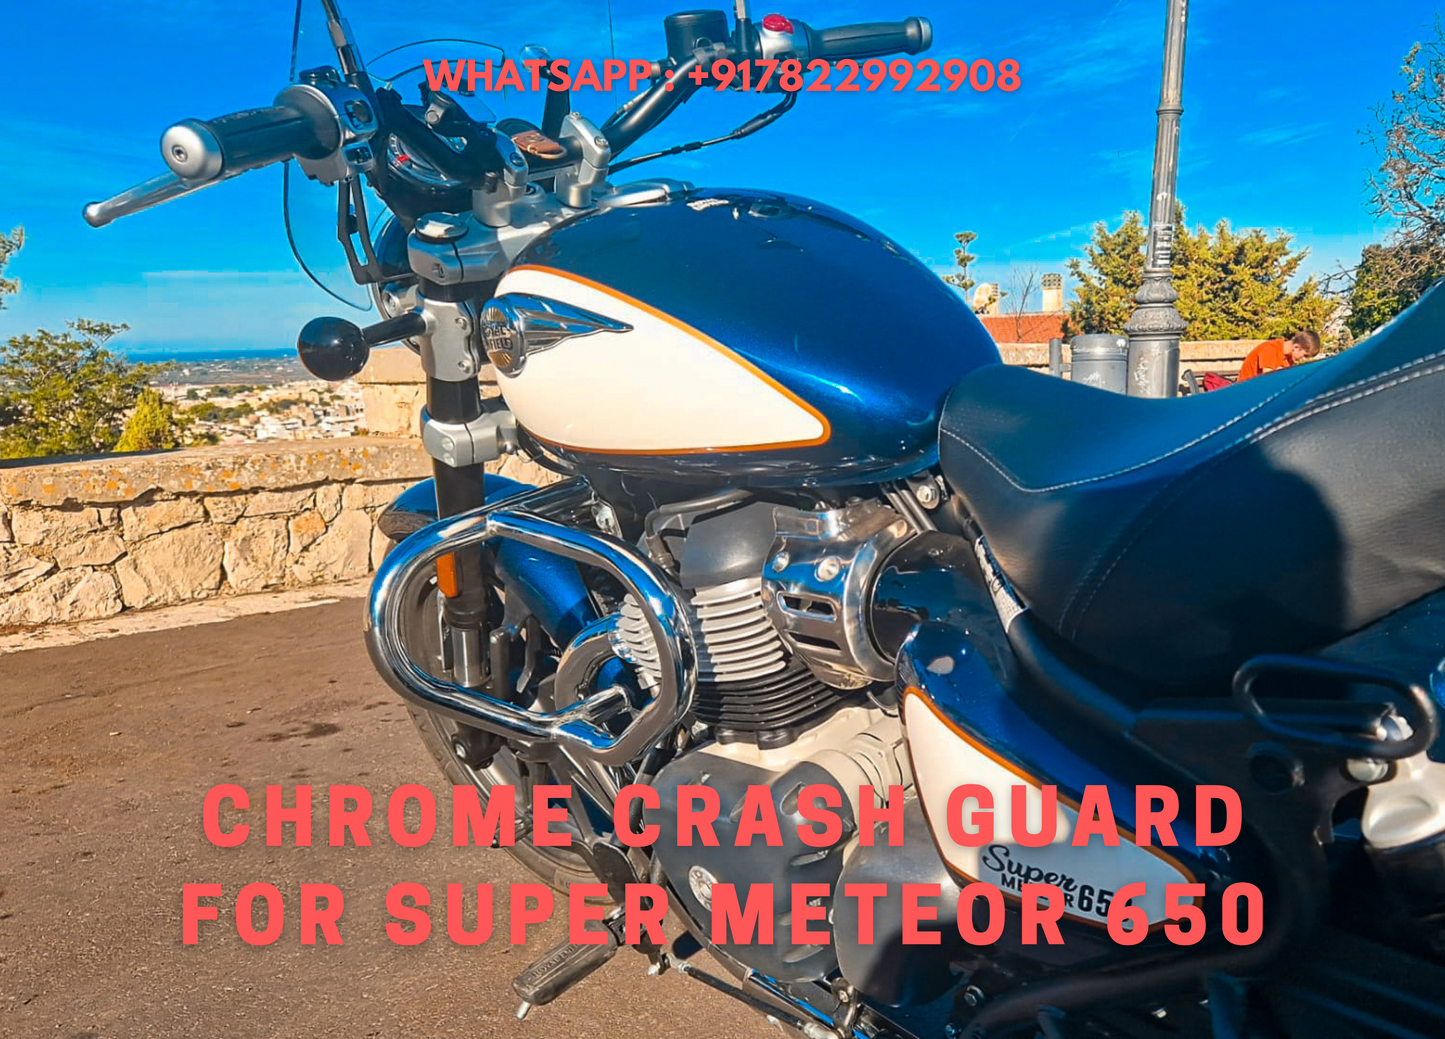 Chrome Crash Guard Compatible For Super Meteor 650